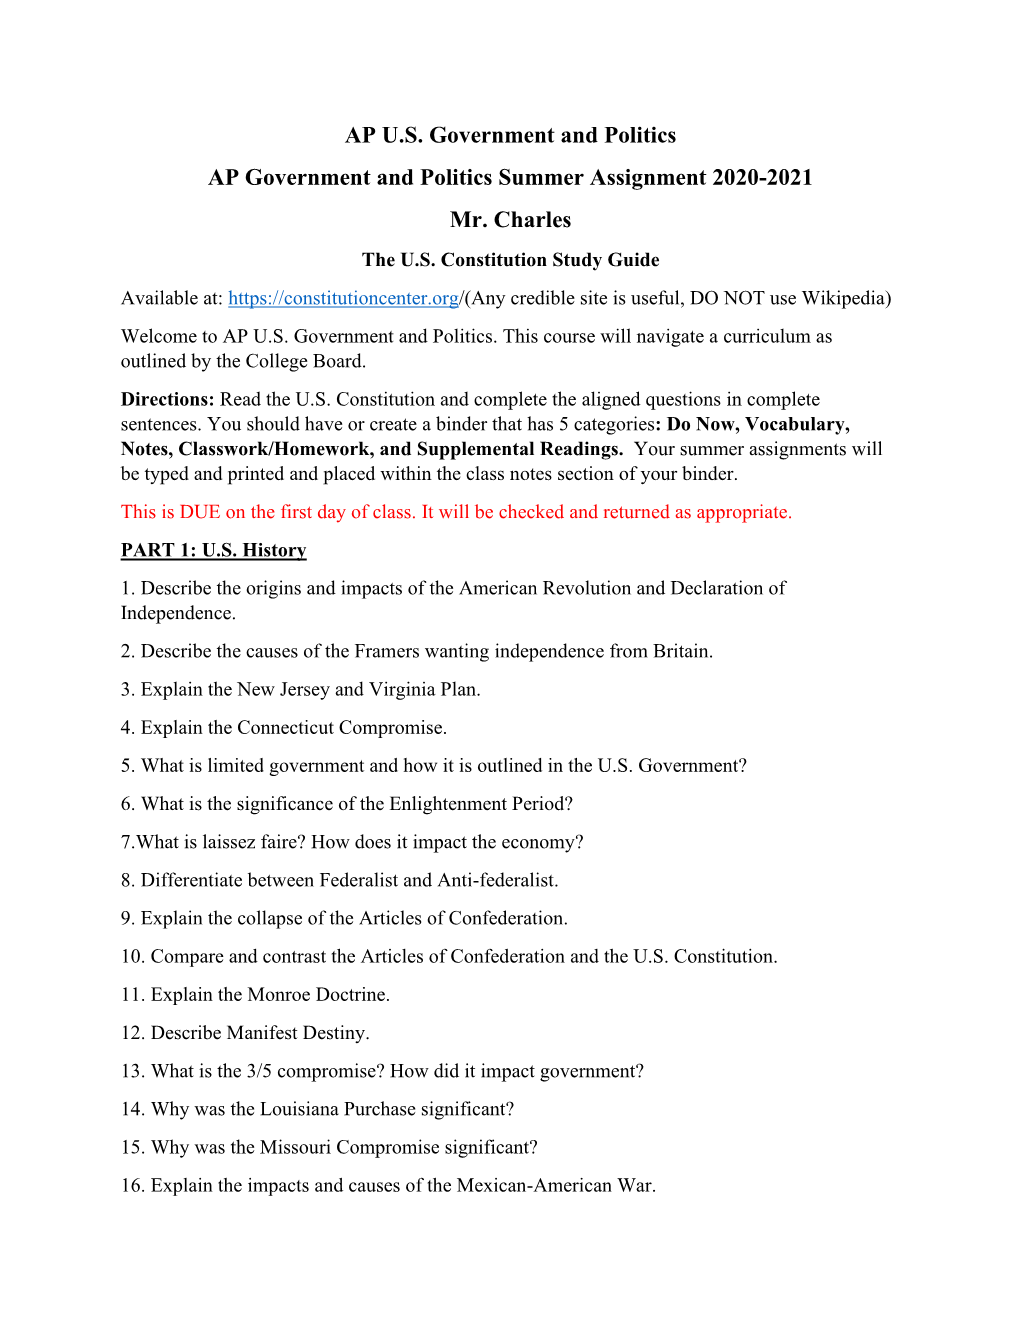 AP U.S. Government and Politics AP Government and Politics Summer Assignment 2020-2021 Mr